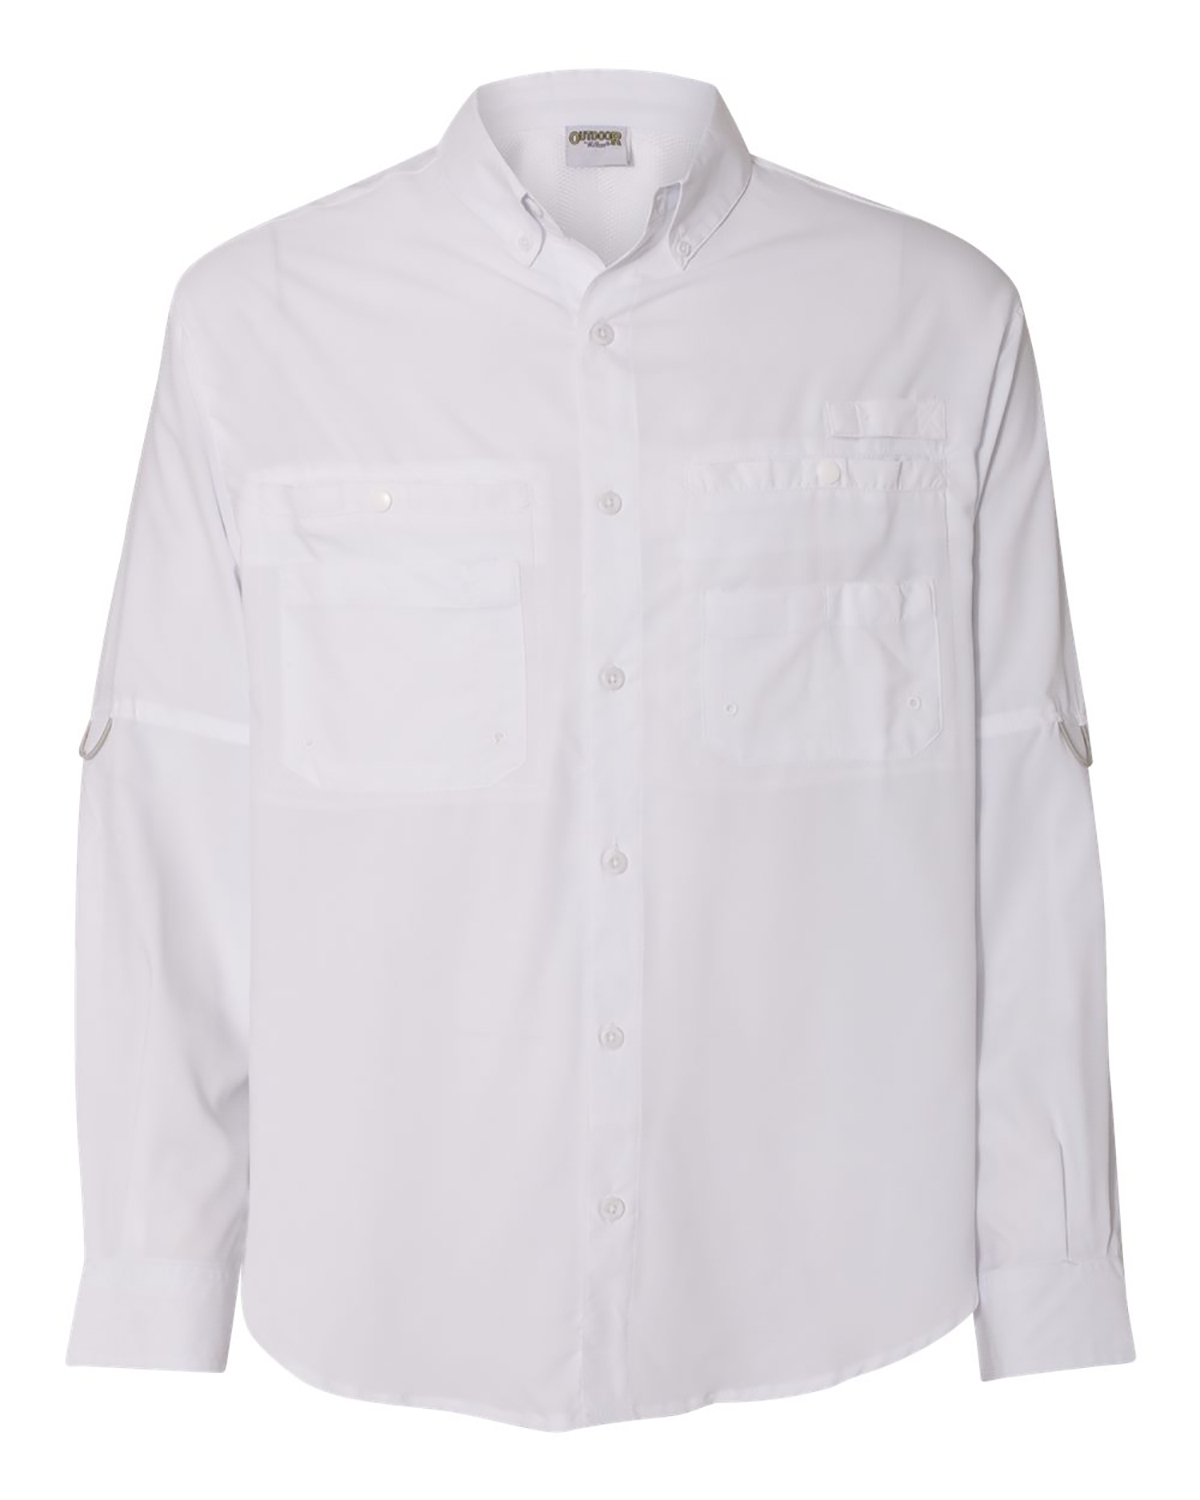 'Hilton ZP2299 Baja Long Sleeve Fishing Shirt'